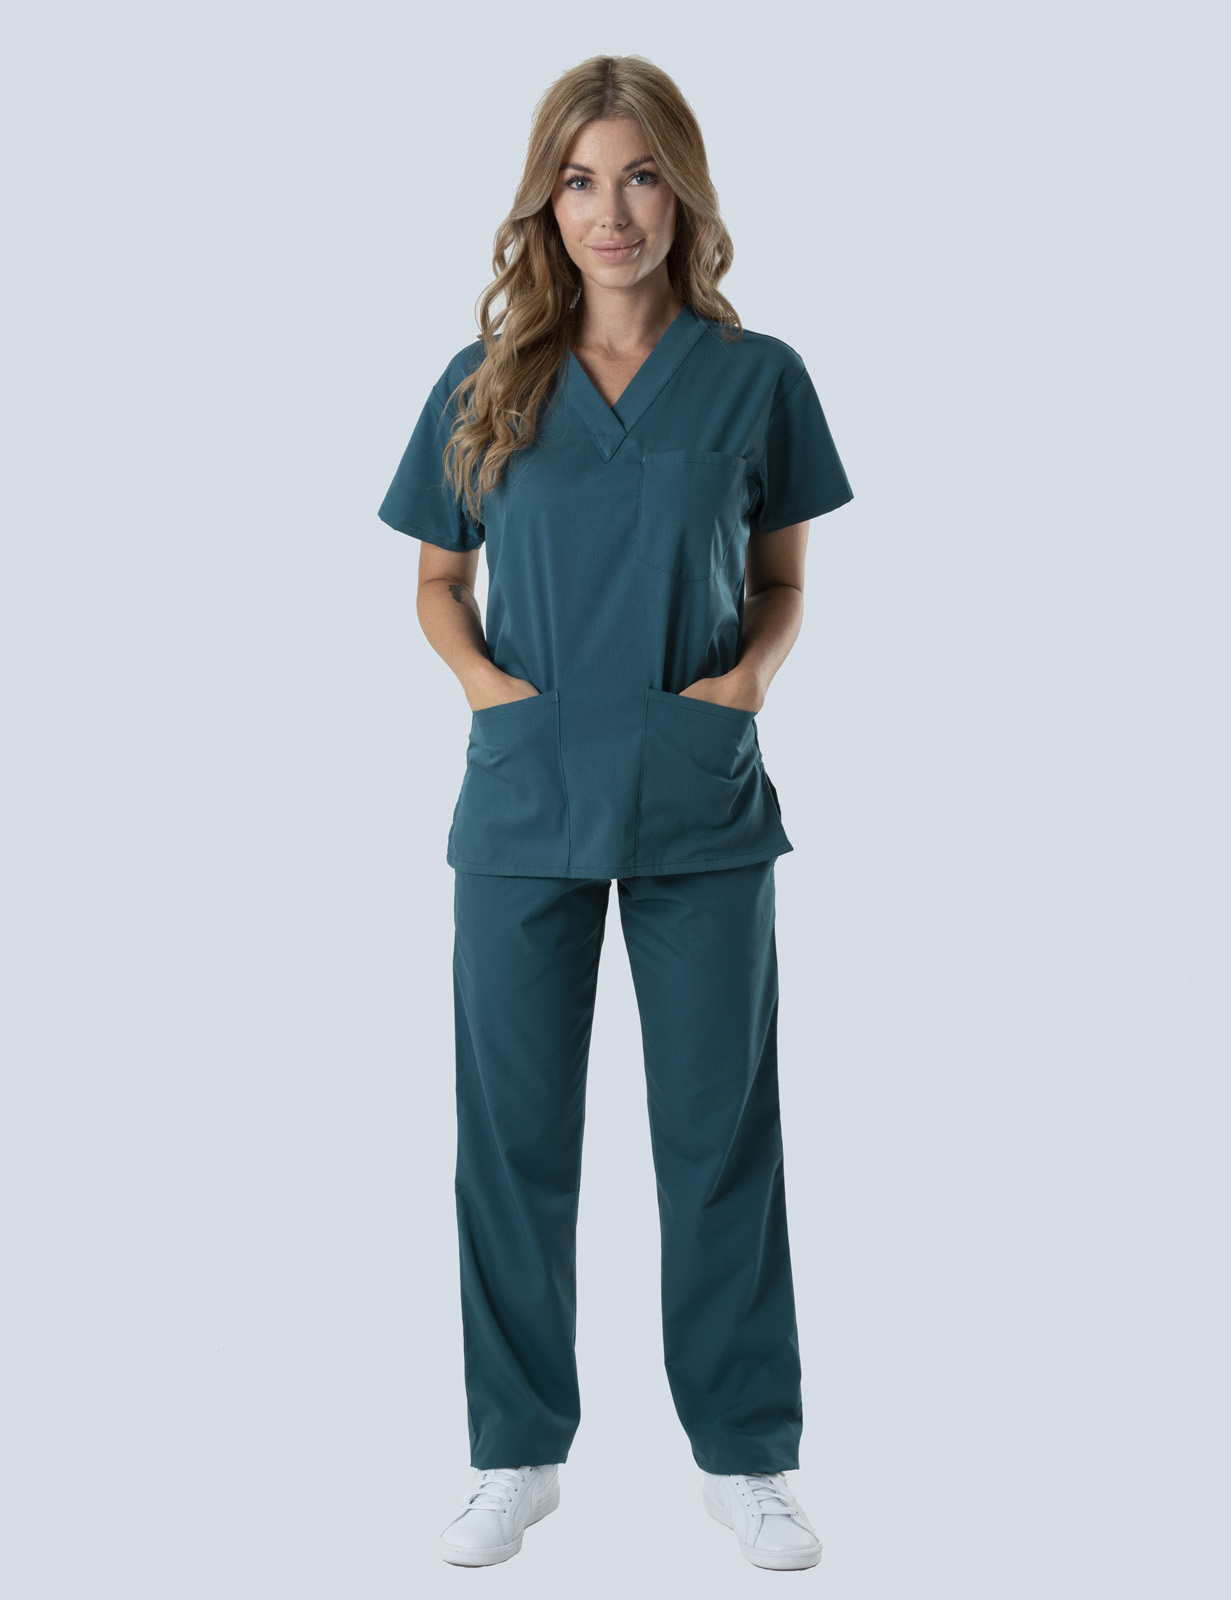 Rockhampton Hospital Emergency Department Clinical Nurse Uniform Set Bundle (4 Pocket Top and Cargo Pants in Caribbean + 3 Logos)